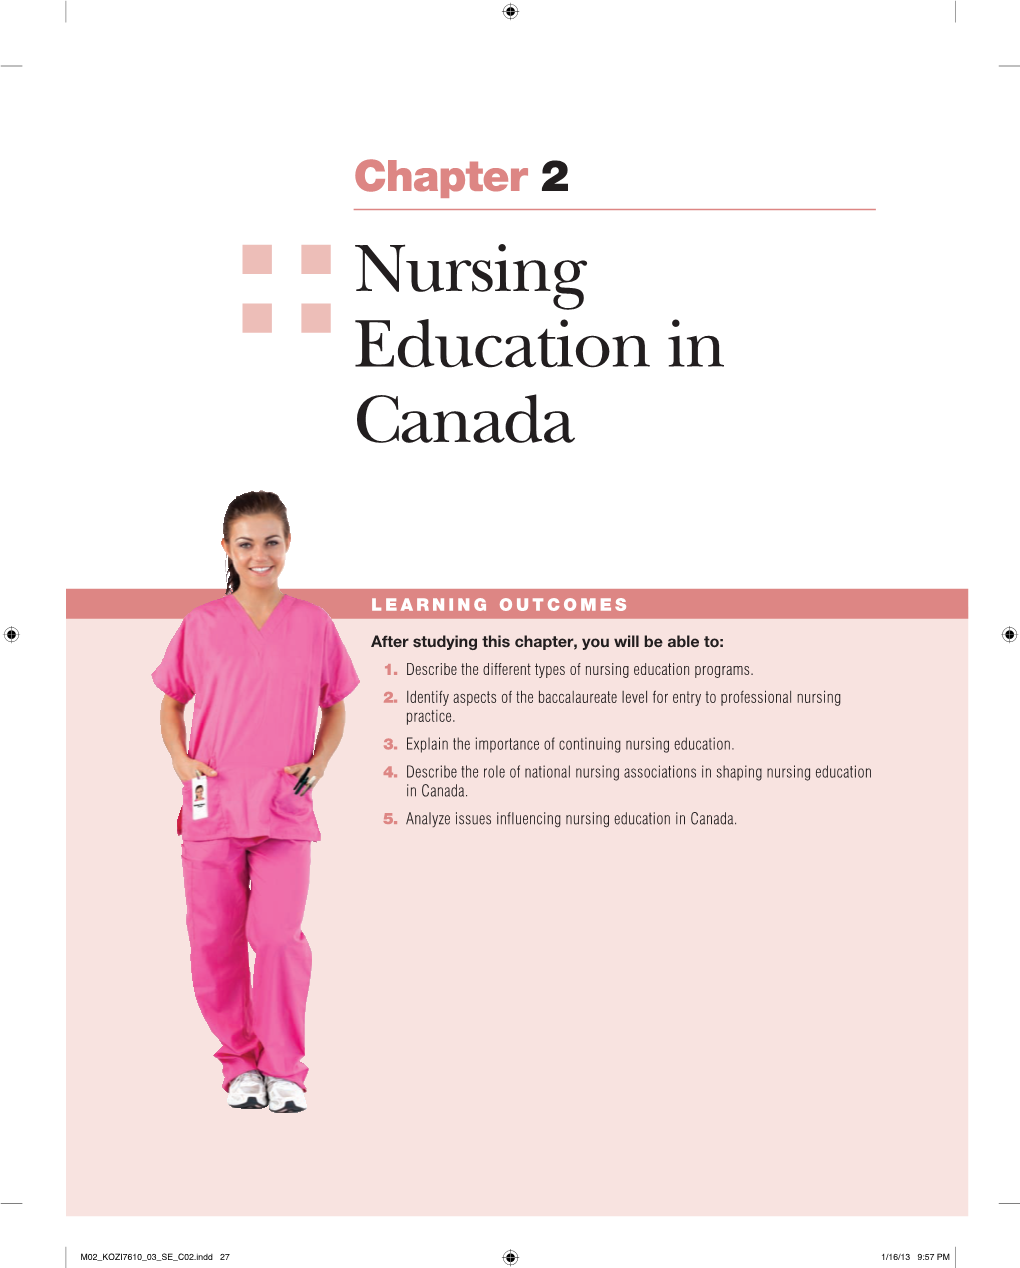 Nursing Education in Canada